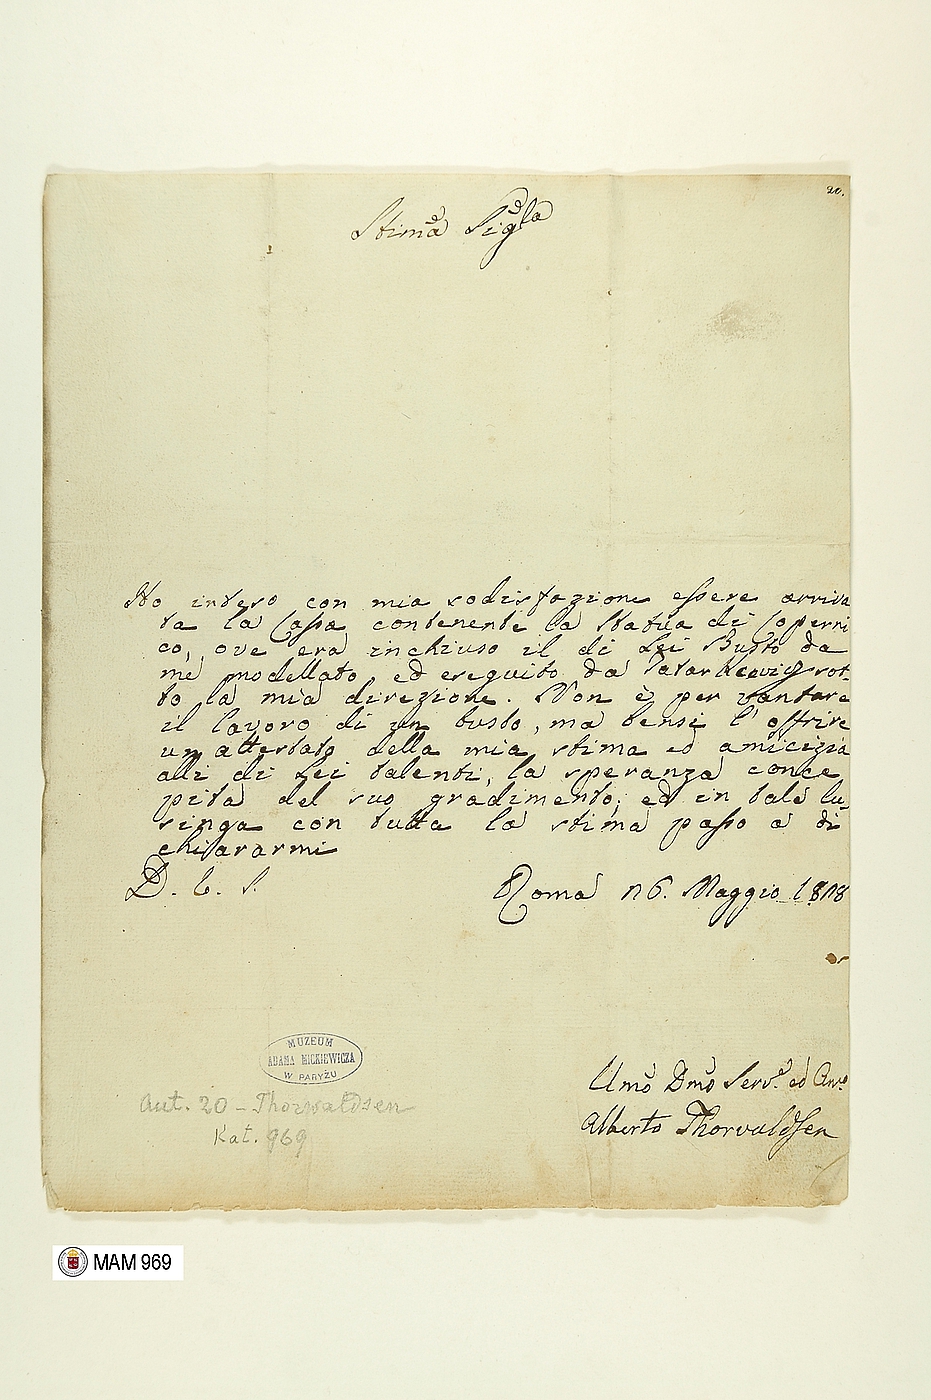 Bertel Thorvaldsen: Brev til Maria Szymanowska af 26.5.1828. Bibliothèque Polonaise de Paris.